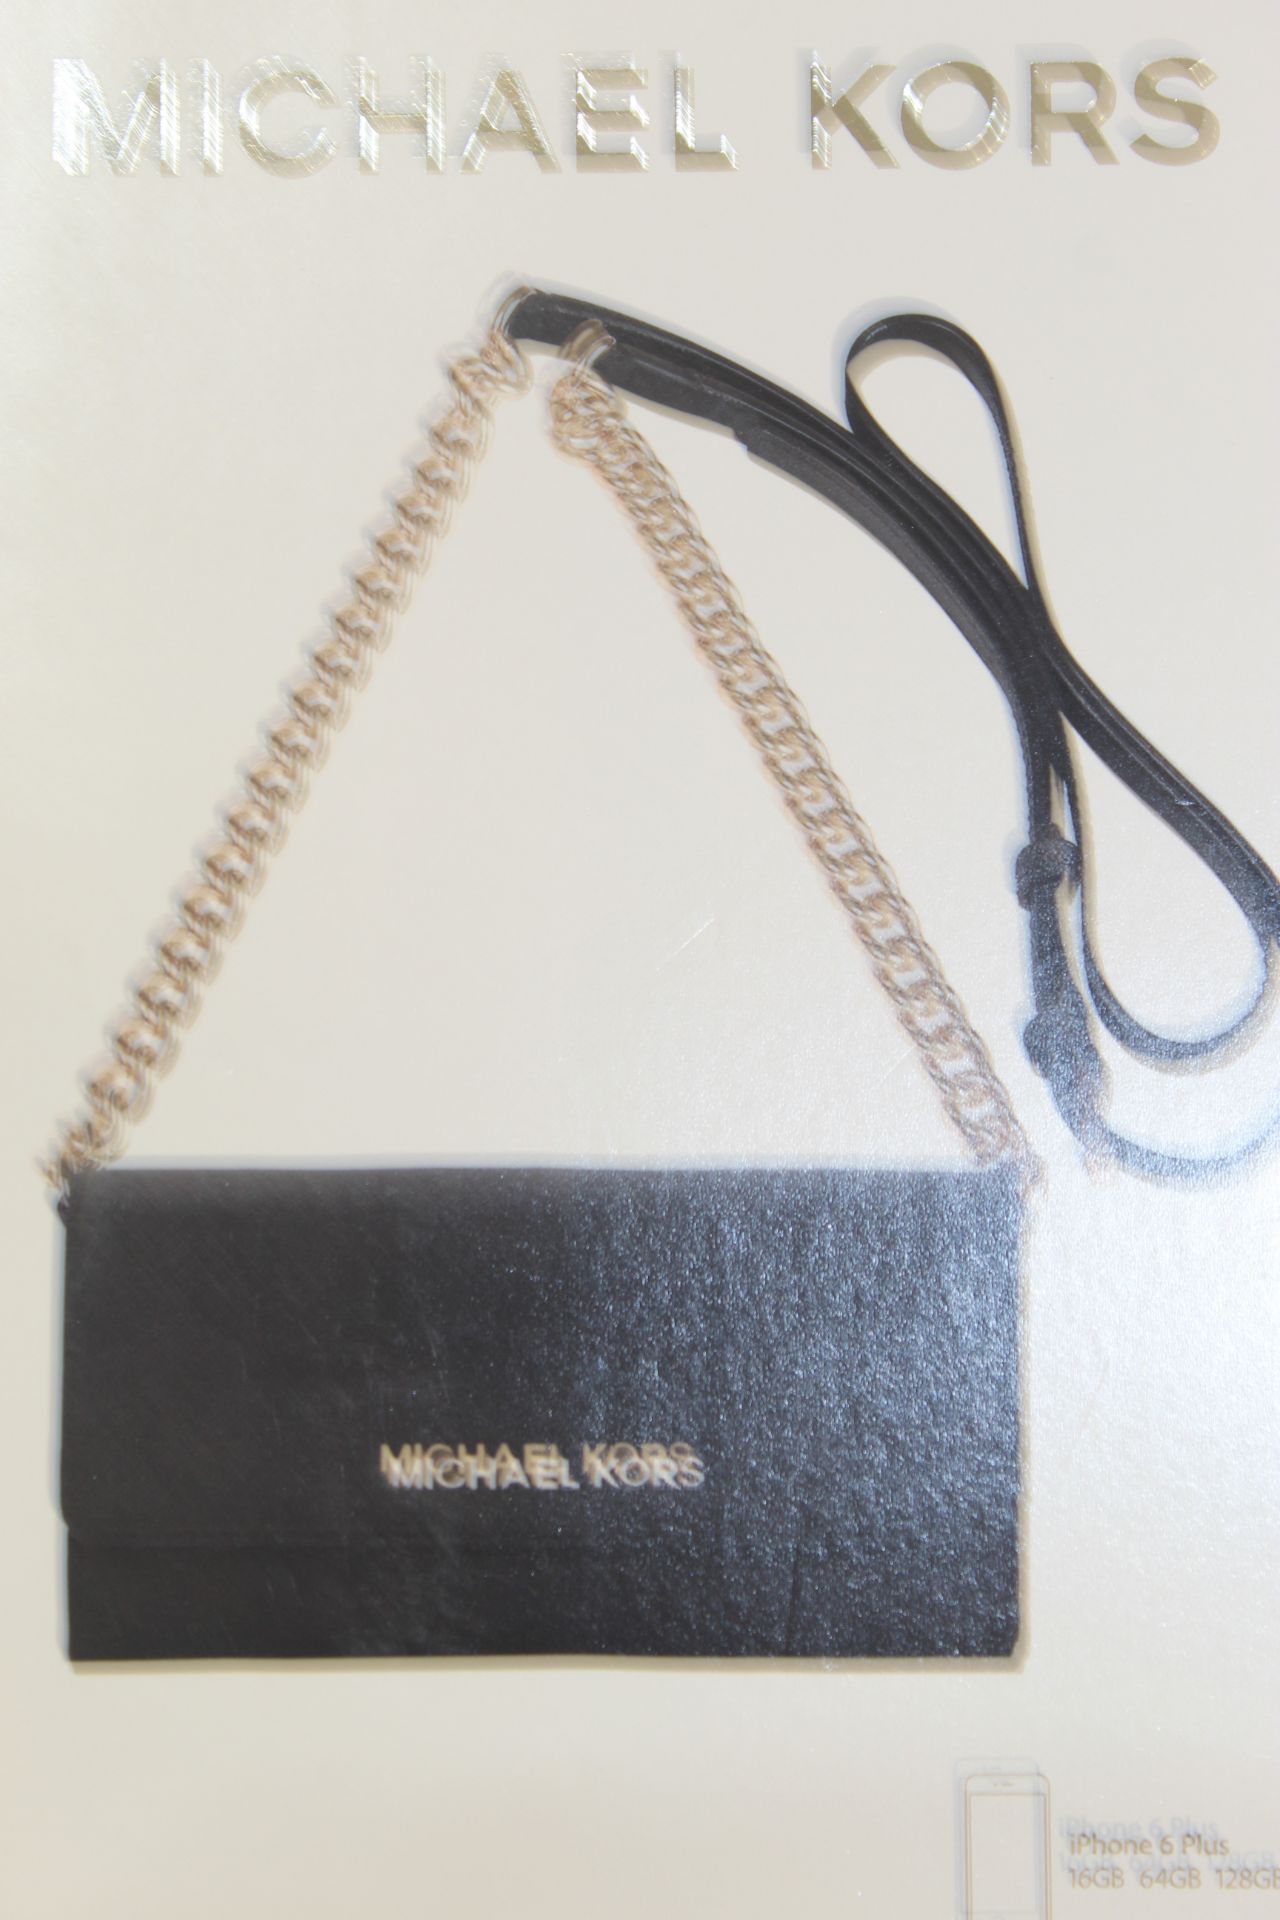 Boxed Brand New Michael Kors Black Saffiano Cross